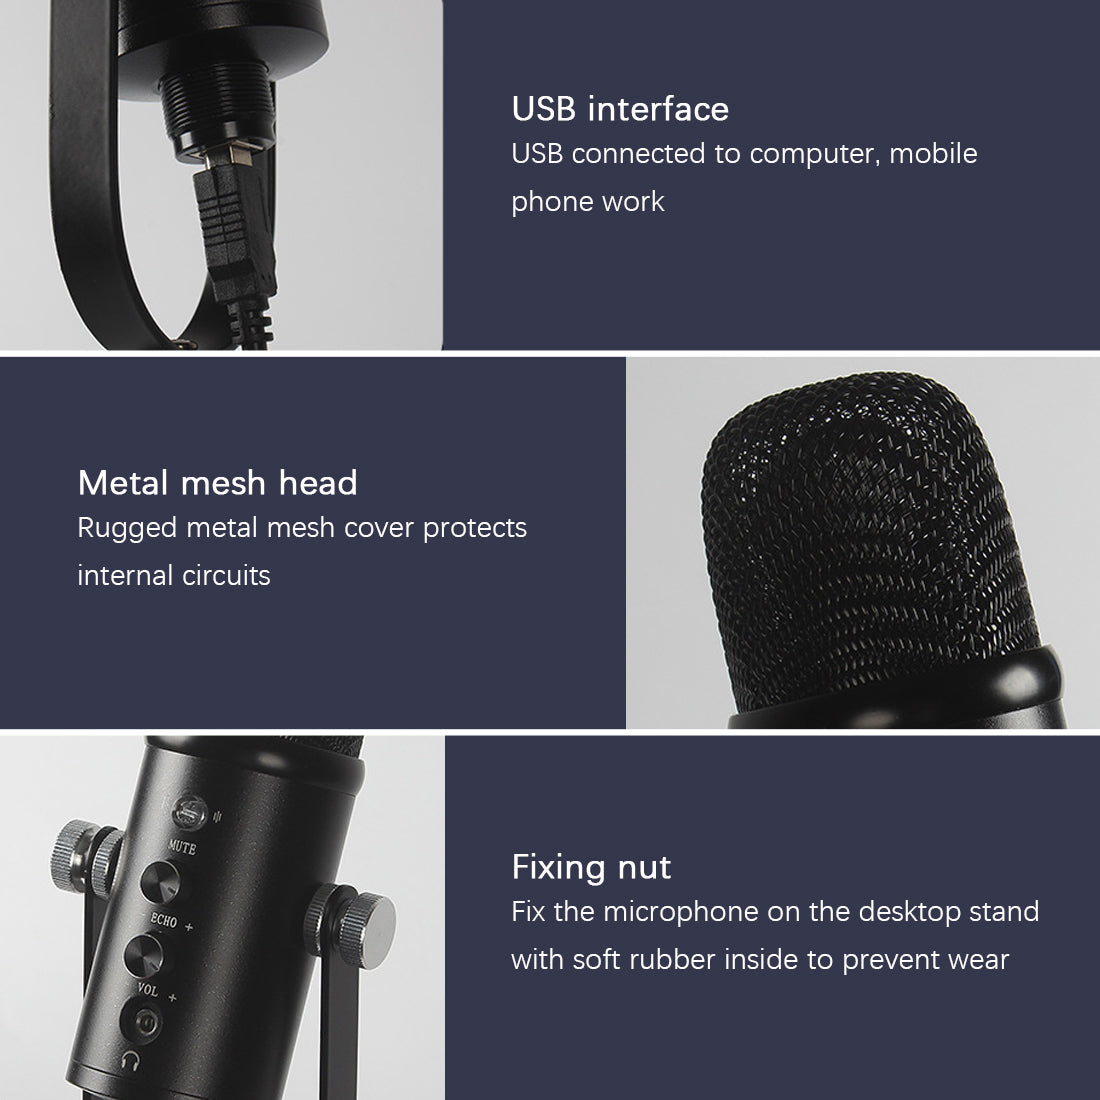 OEM Professional USB Recording Condenser Microphone Desktop Studio Microphone YR13 | Electrr Inc